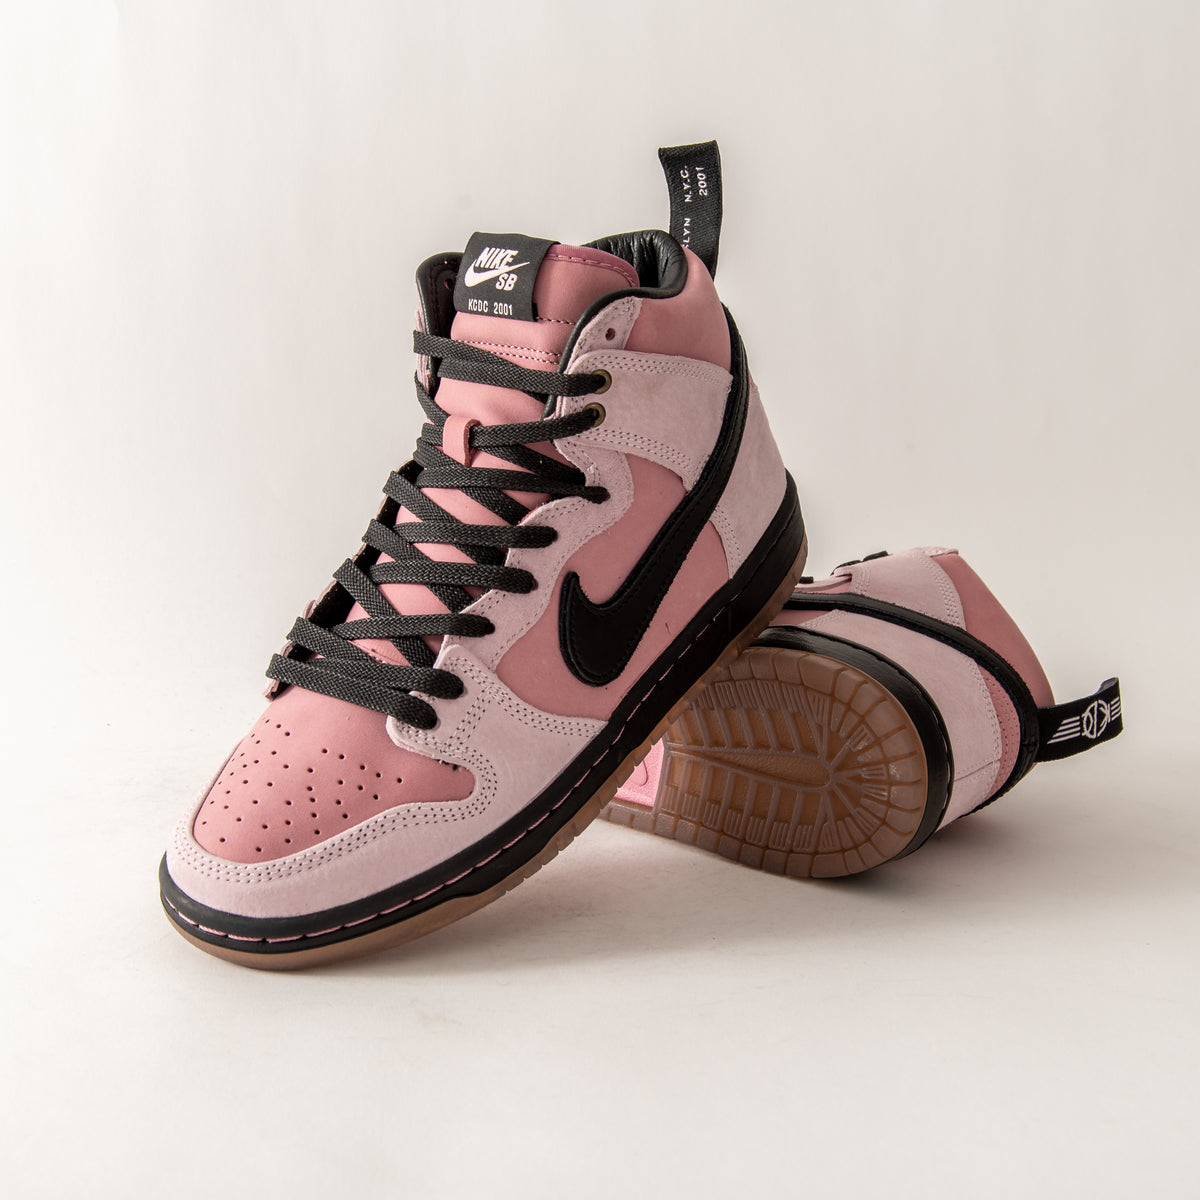 Nike SB Dunk High "Pink/Black"